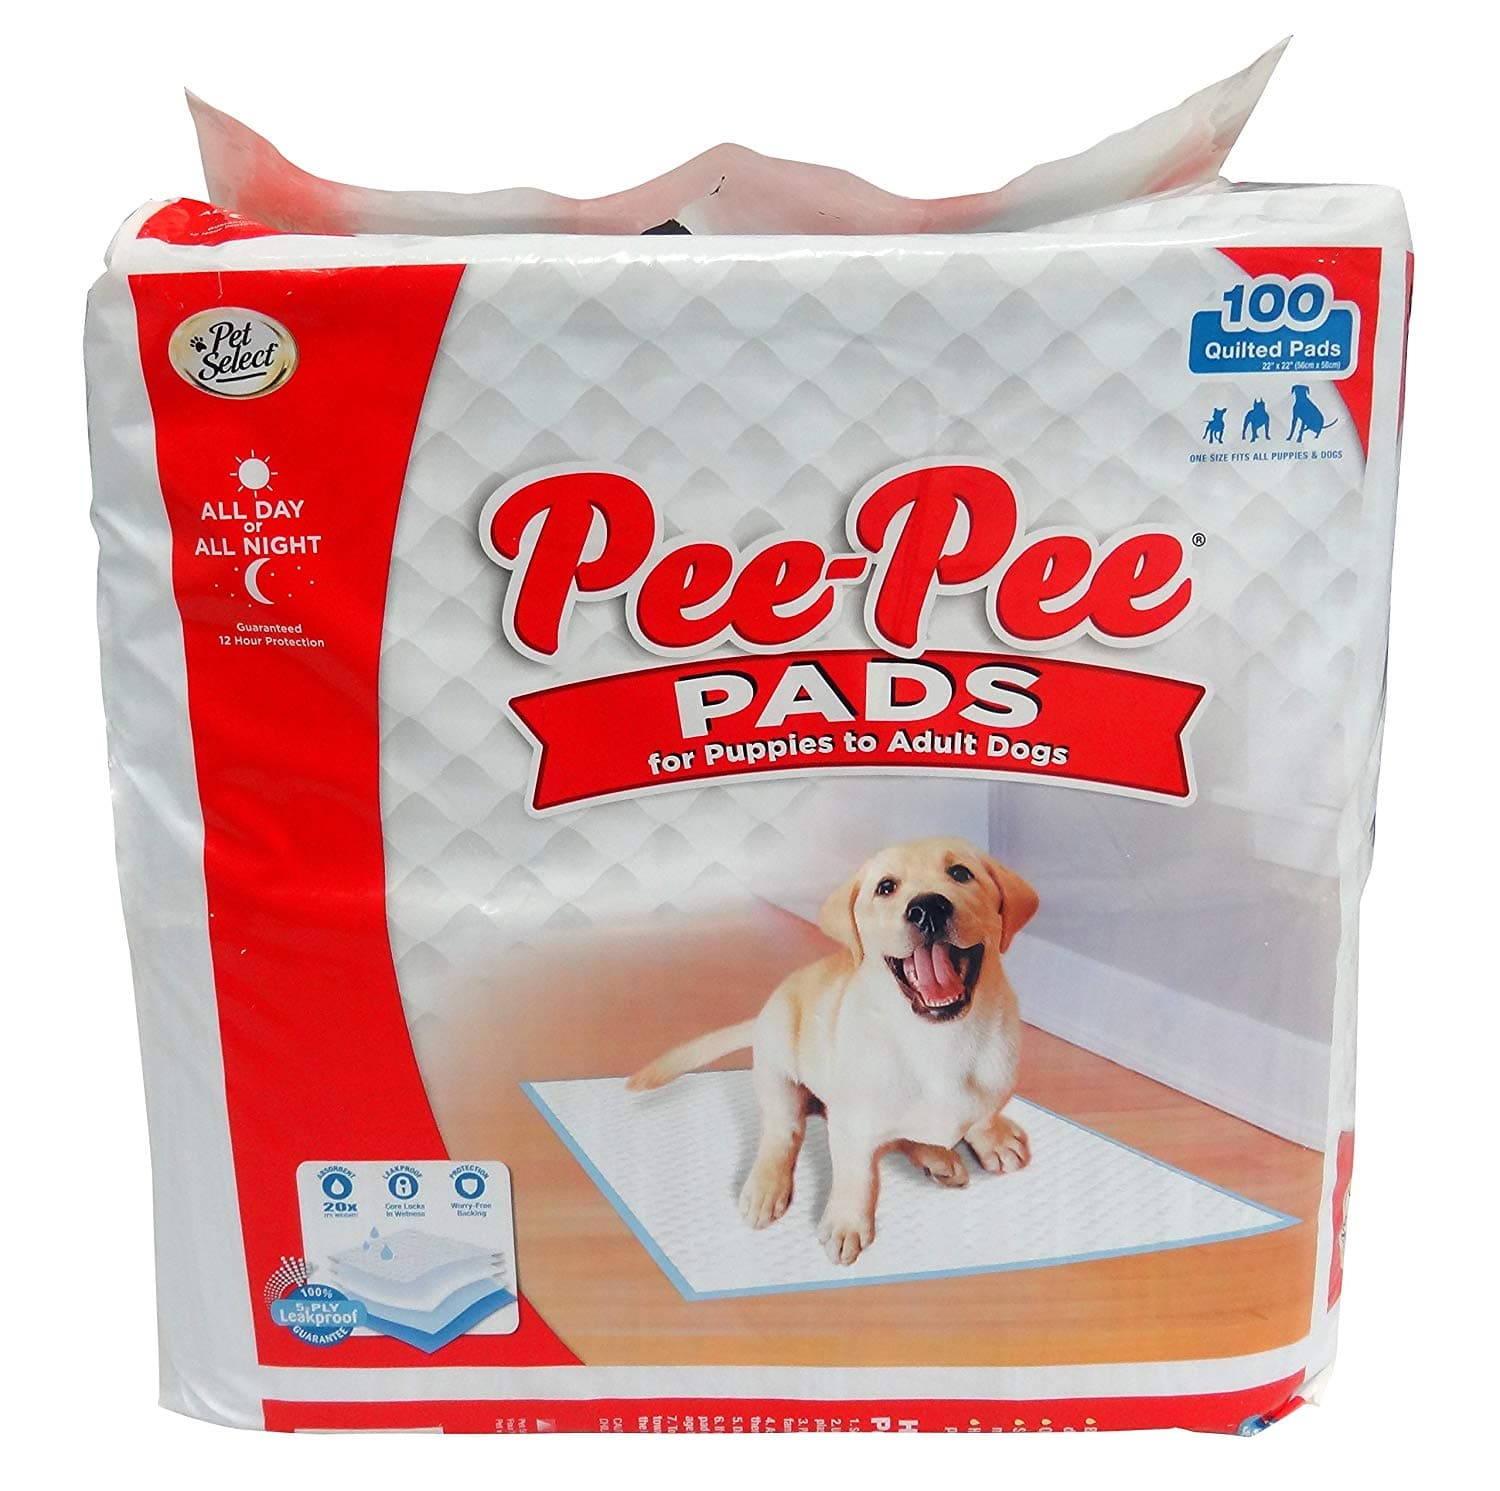 Four Paws Pet Select Pee-Pee Pads, 100ct